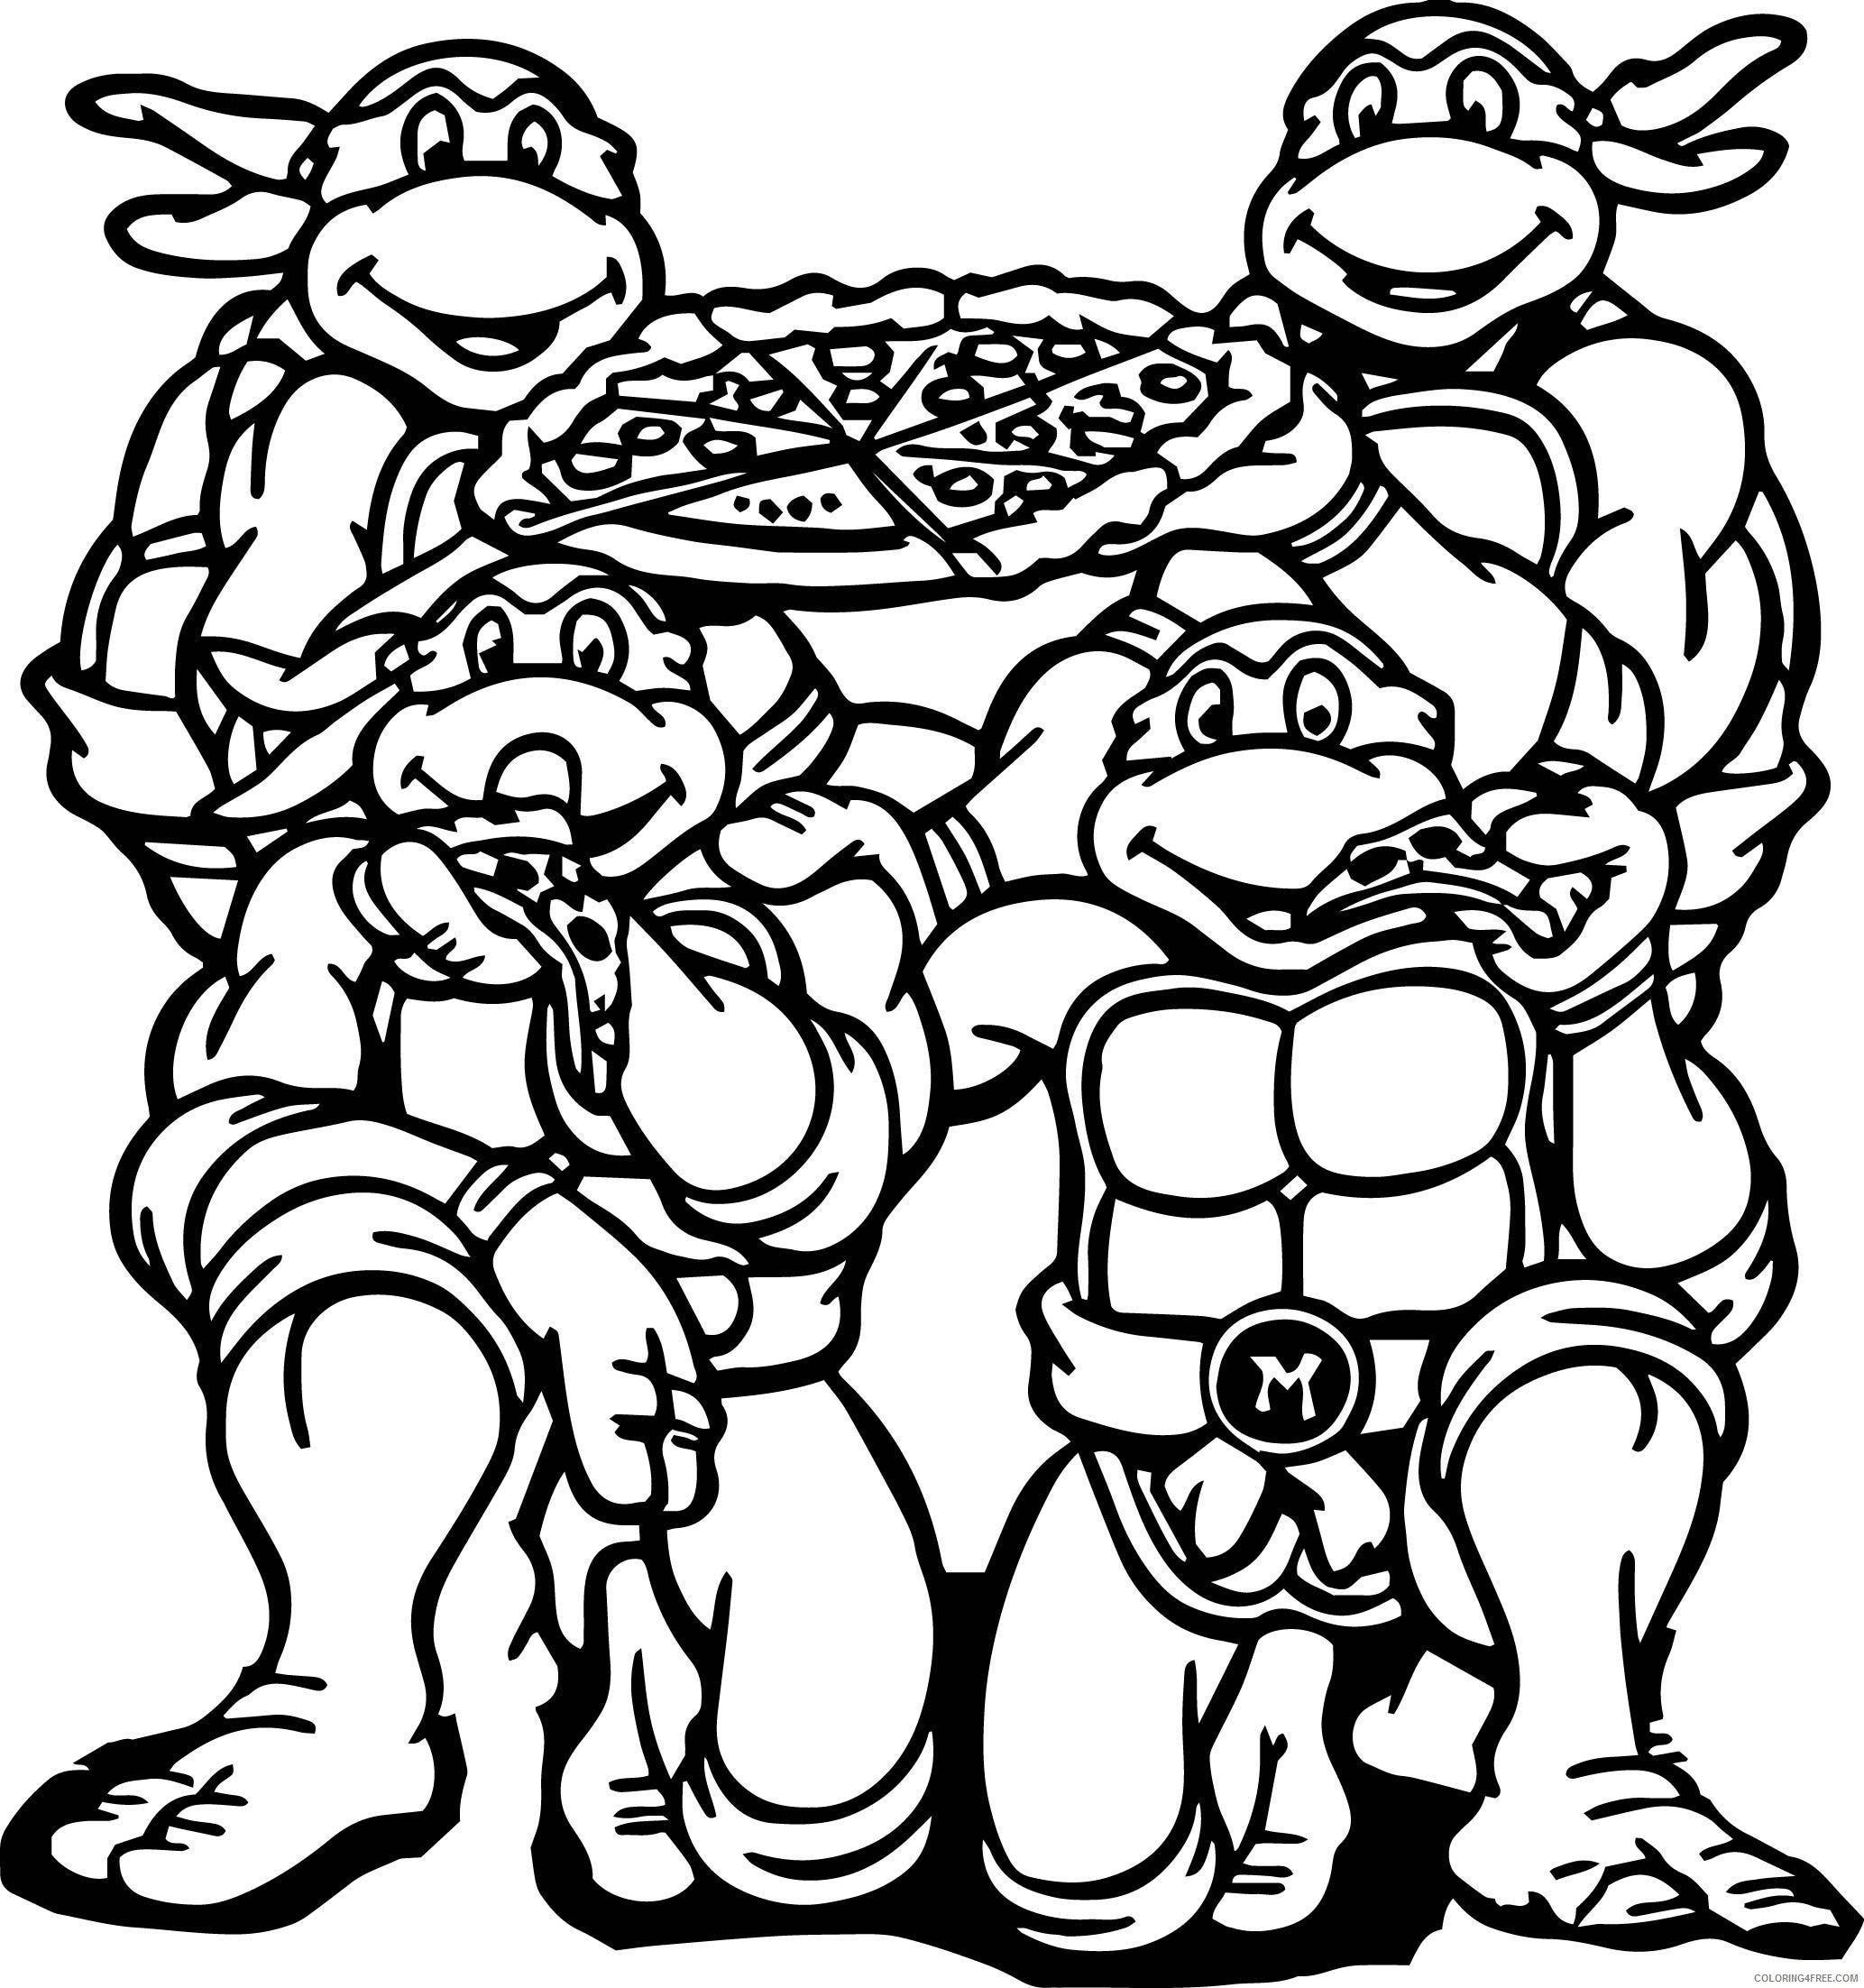 Teenage Mutant Ninja Turtles Coloring Pages Cartoons Teenage Mutant Ninja Turtles 1 Printable 2020 6336 Coloring4free